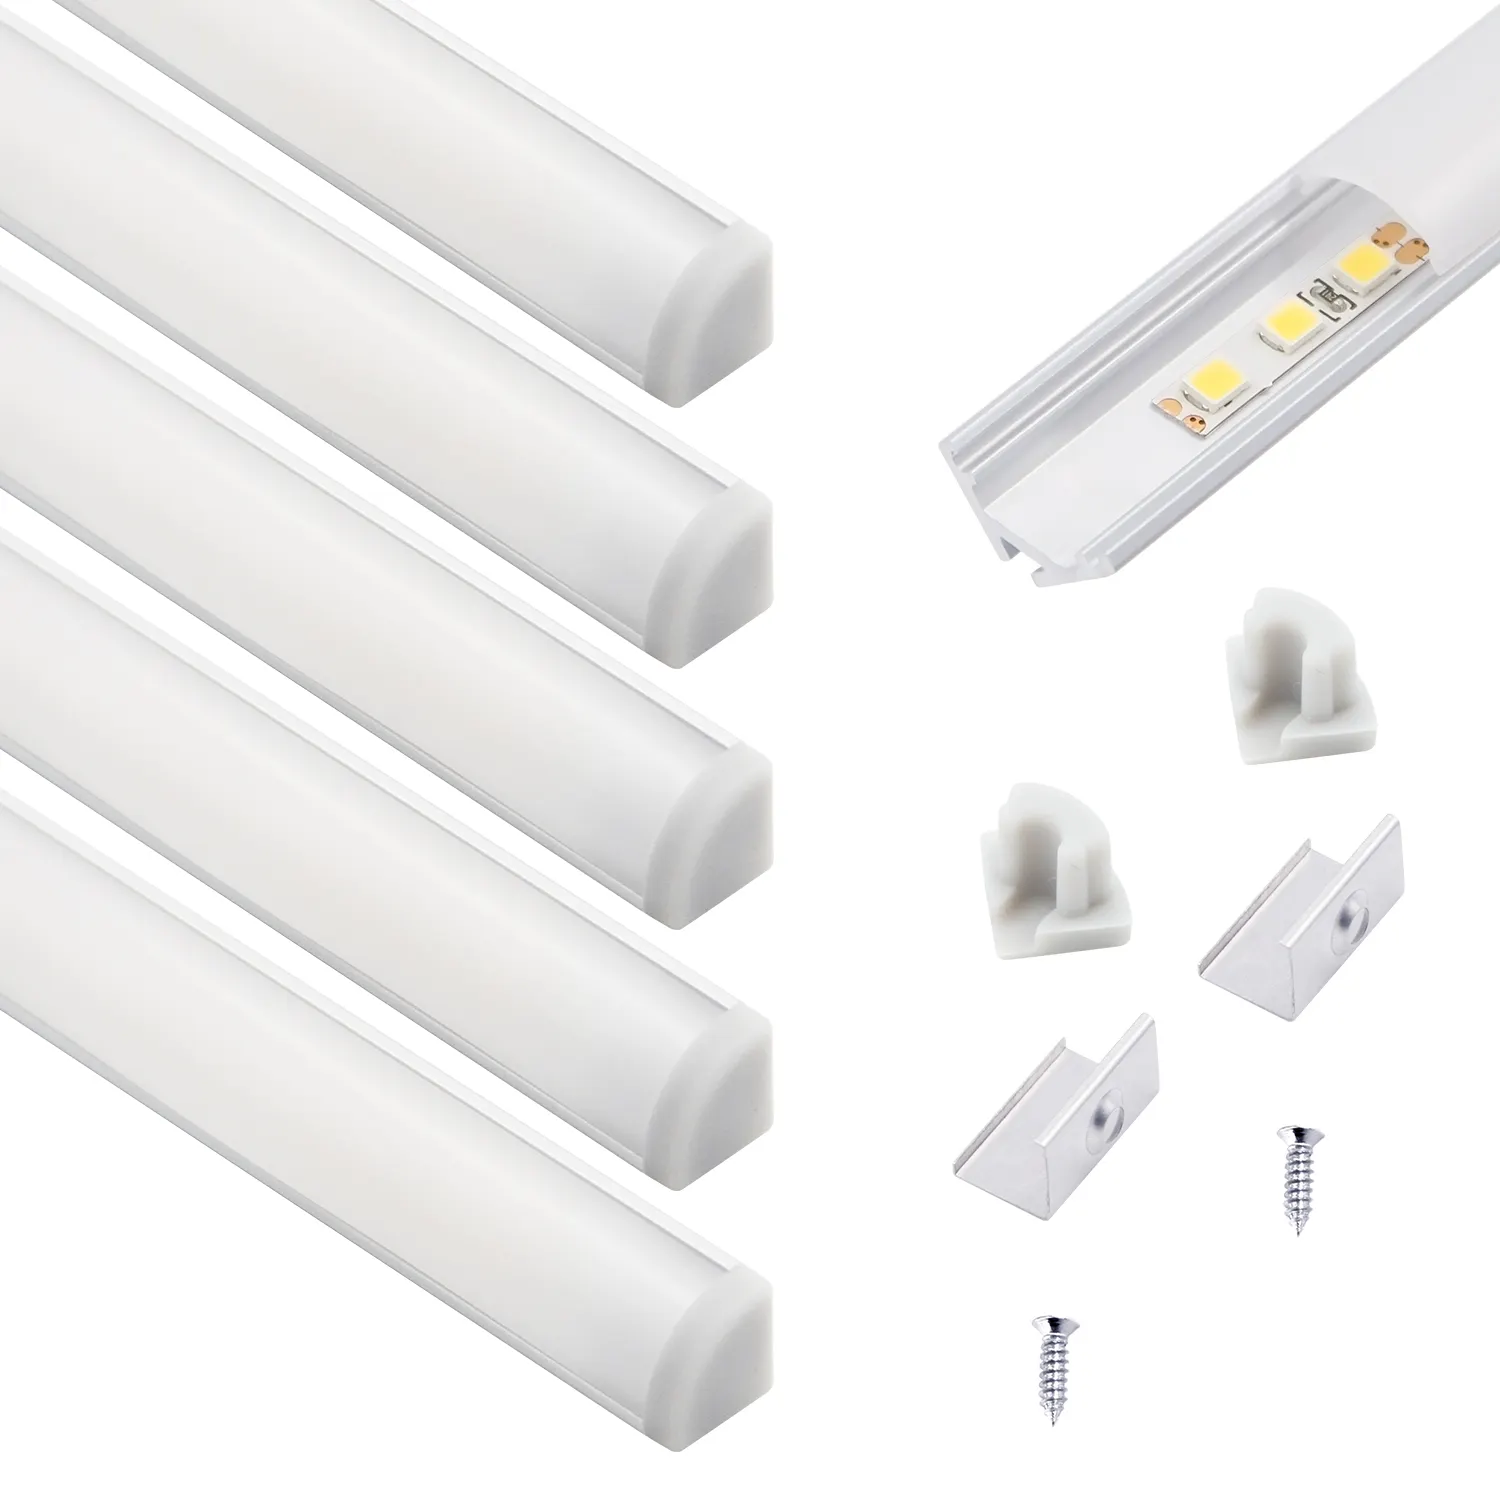 VST Customized Length 10*10mm 45 Degree Corner Mounted Aluminum Profile Light LED Linear Profile Light Under Cabinet Light